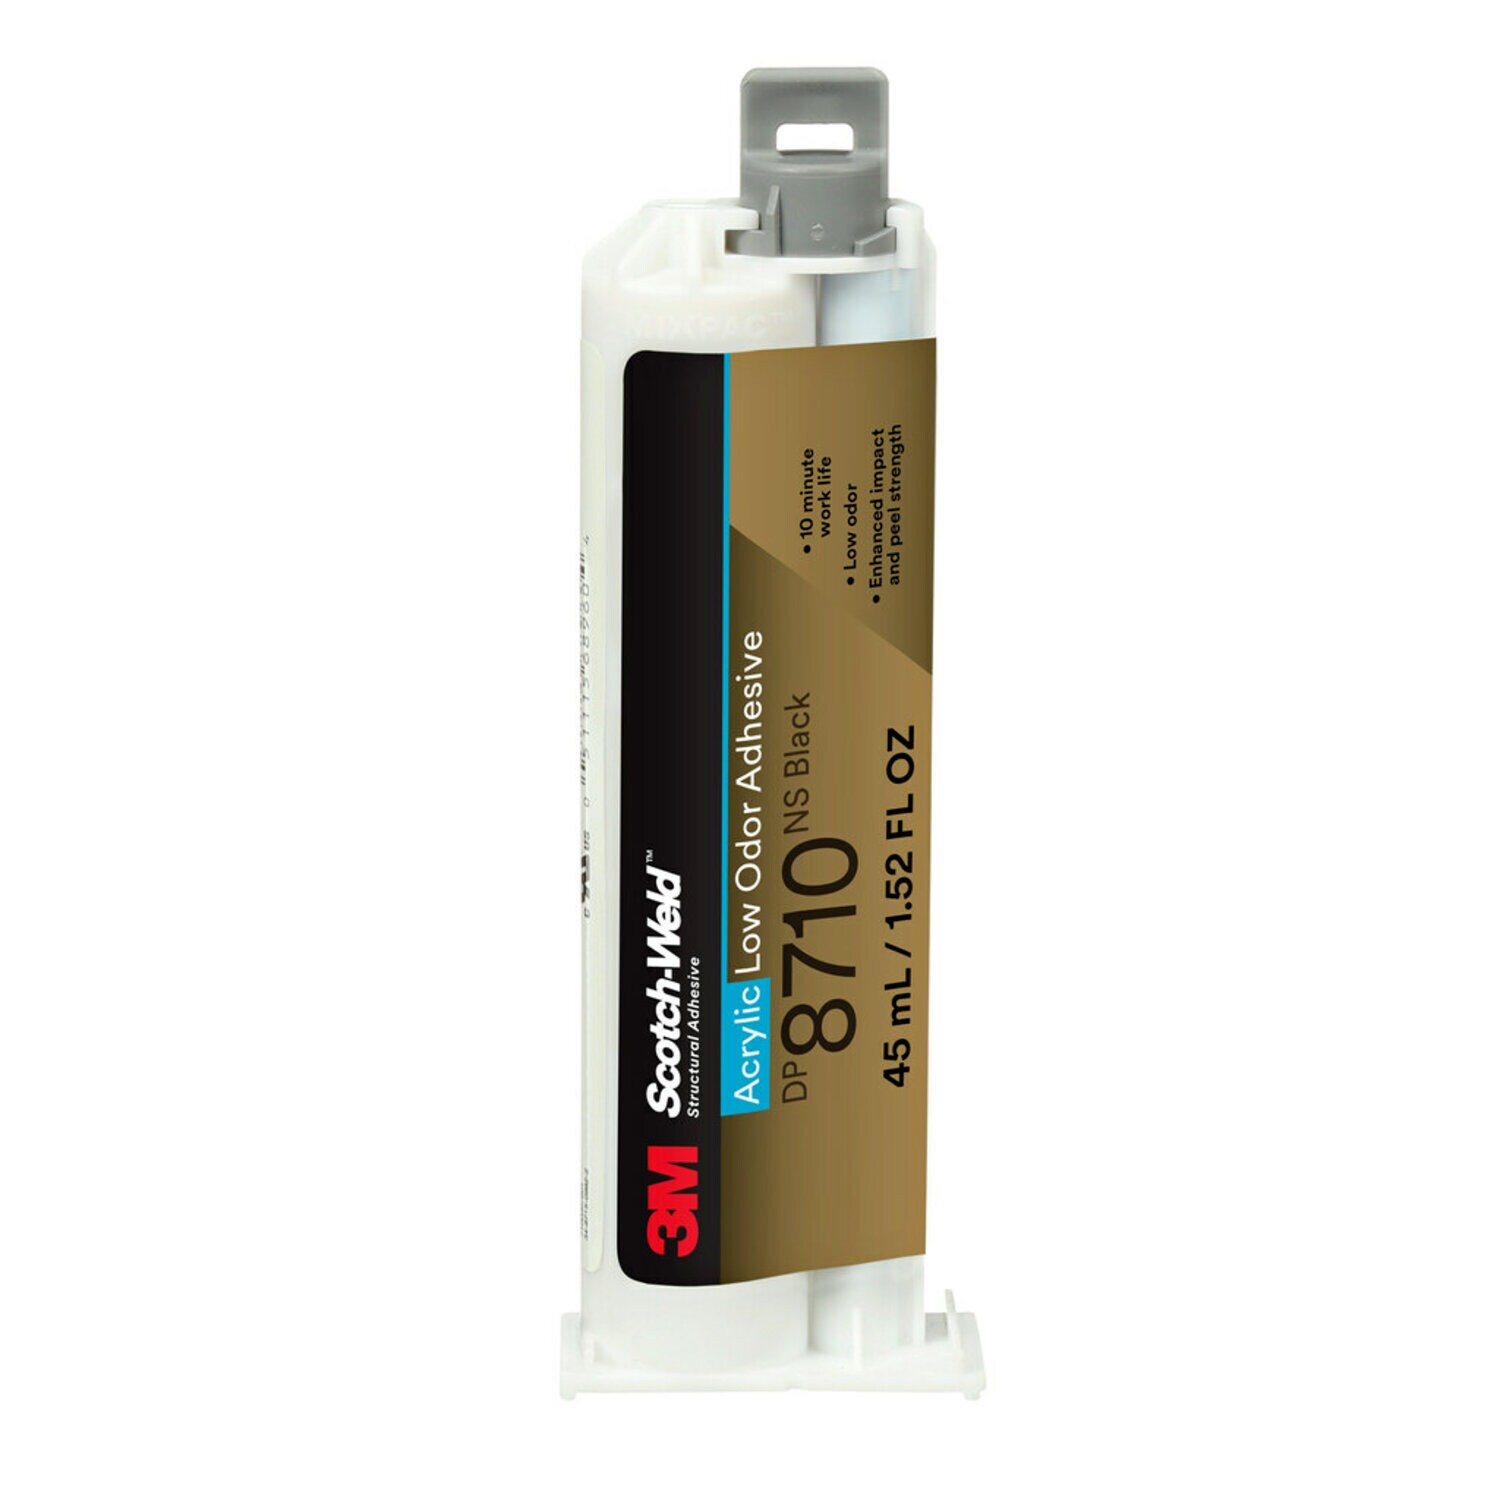 7100233349 - 3M Scotch-Weld Low Odor Acrylic Adhesive DP8710NS, Black, 45 mL Duo-
Pak, 12/Case